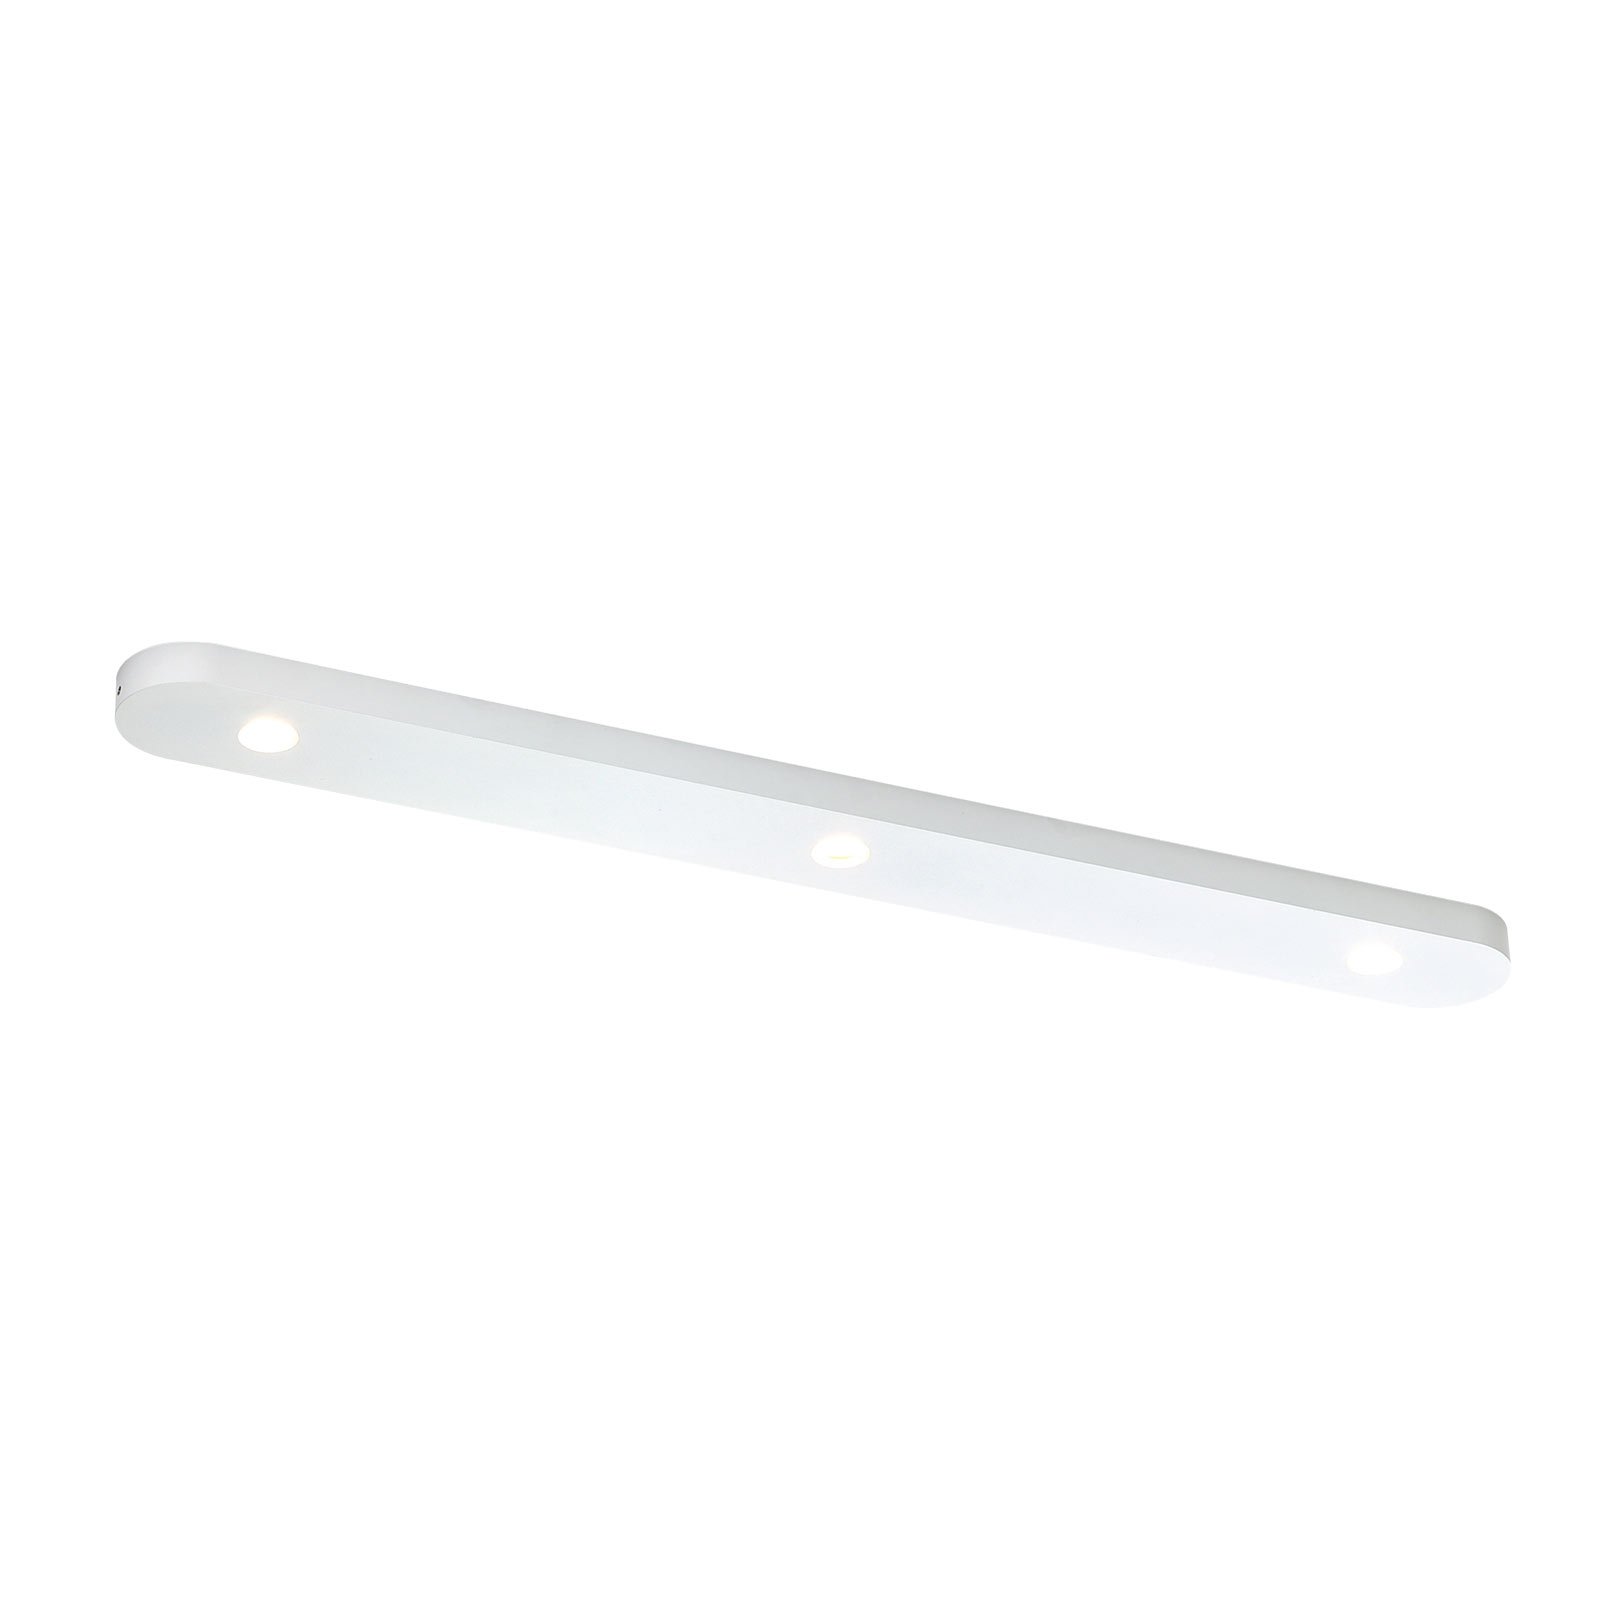 Lampa sufitowa LED Bopp Close, 3-punktowa, biała